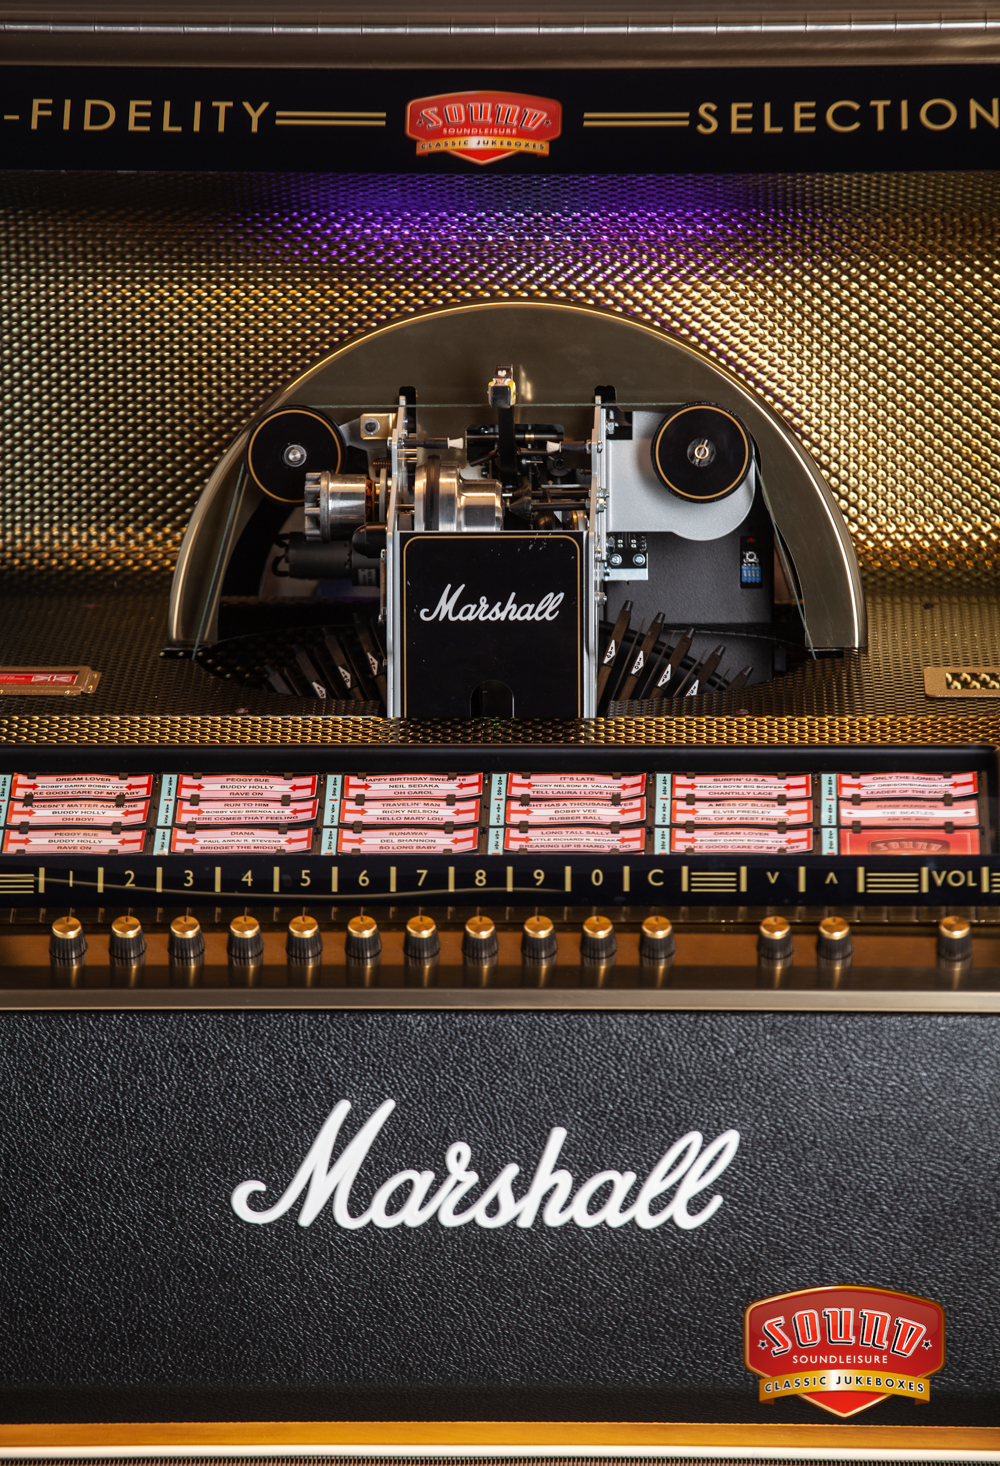 https://www.massautomatic.fr/uploads/Marshall_Vinyl_Jukebox-2.jpg